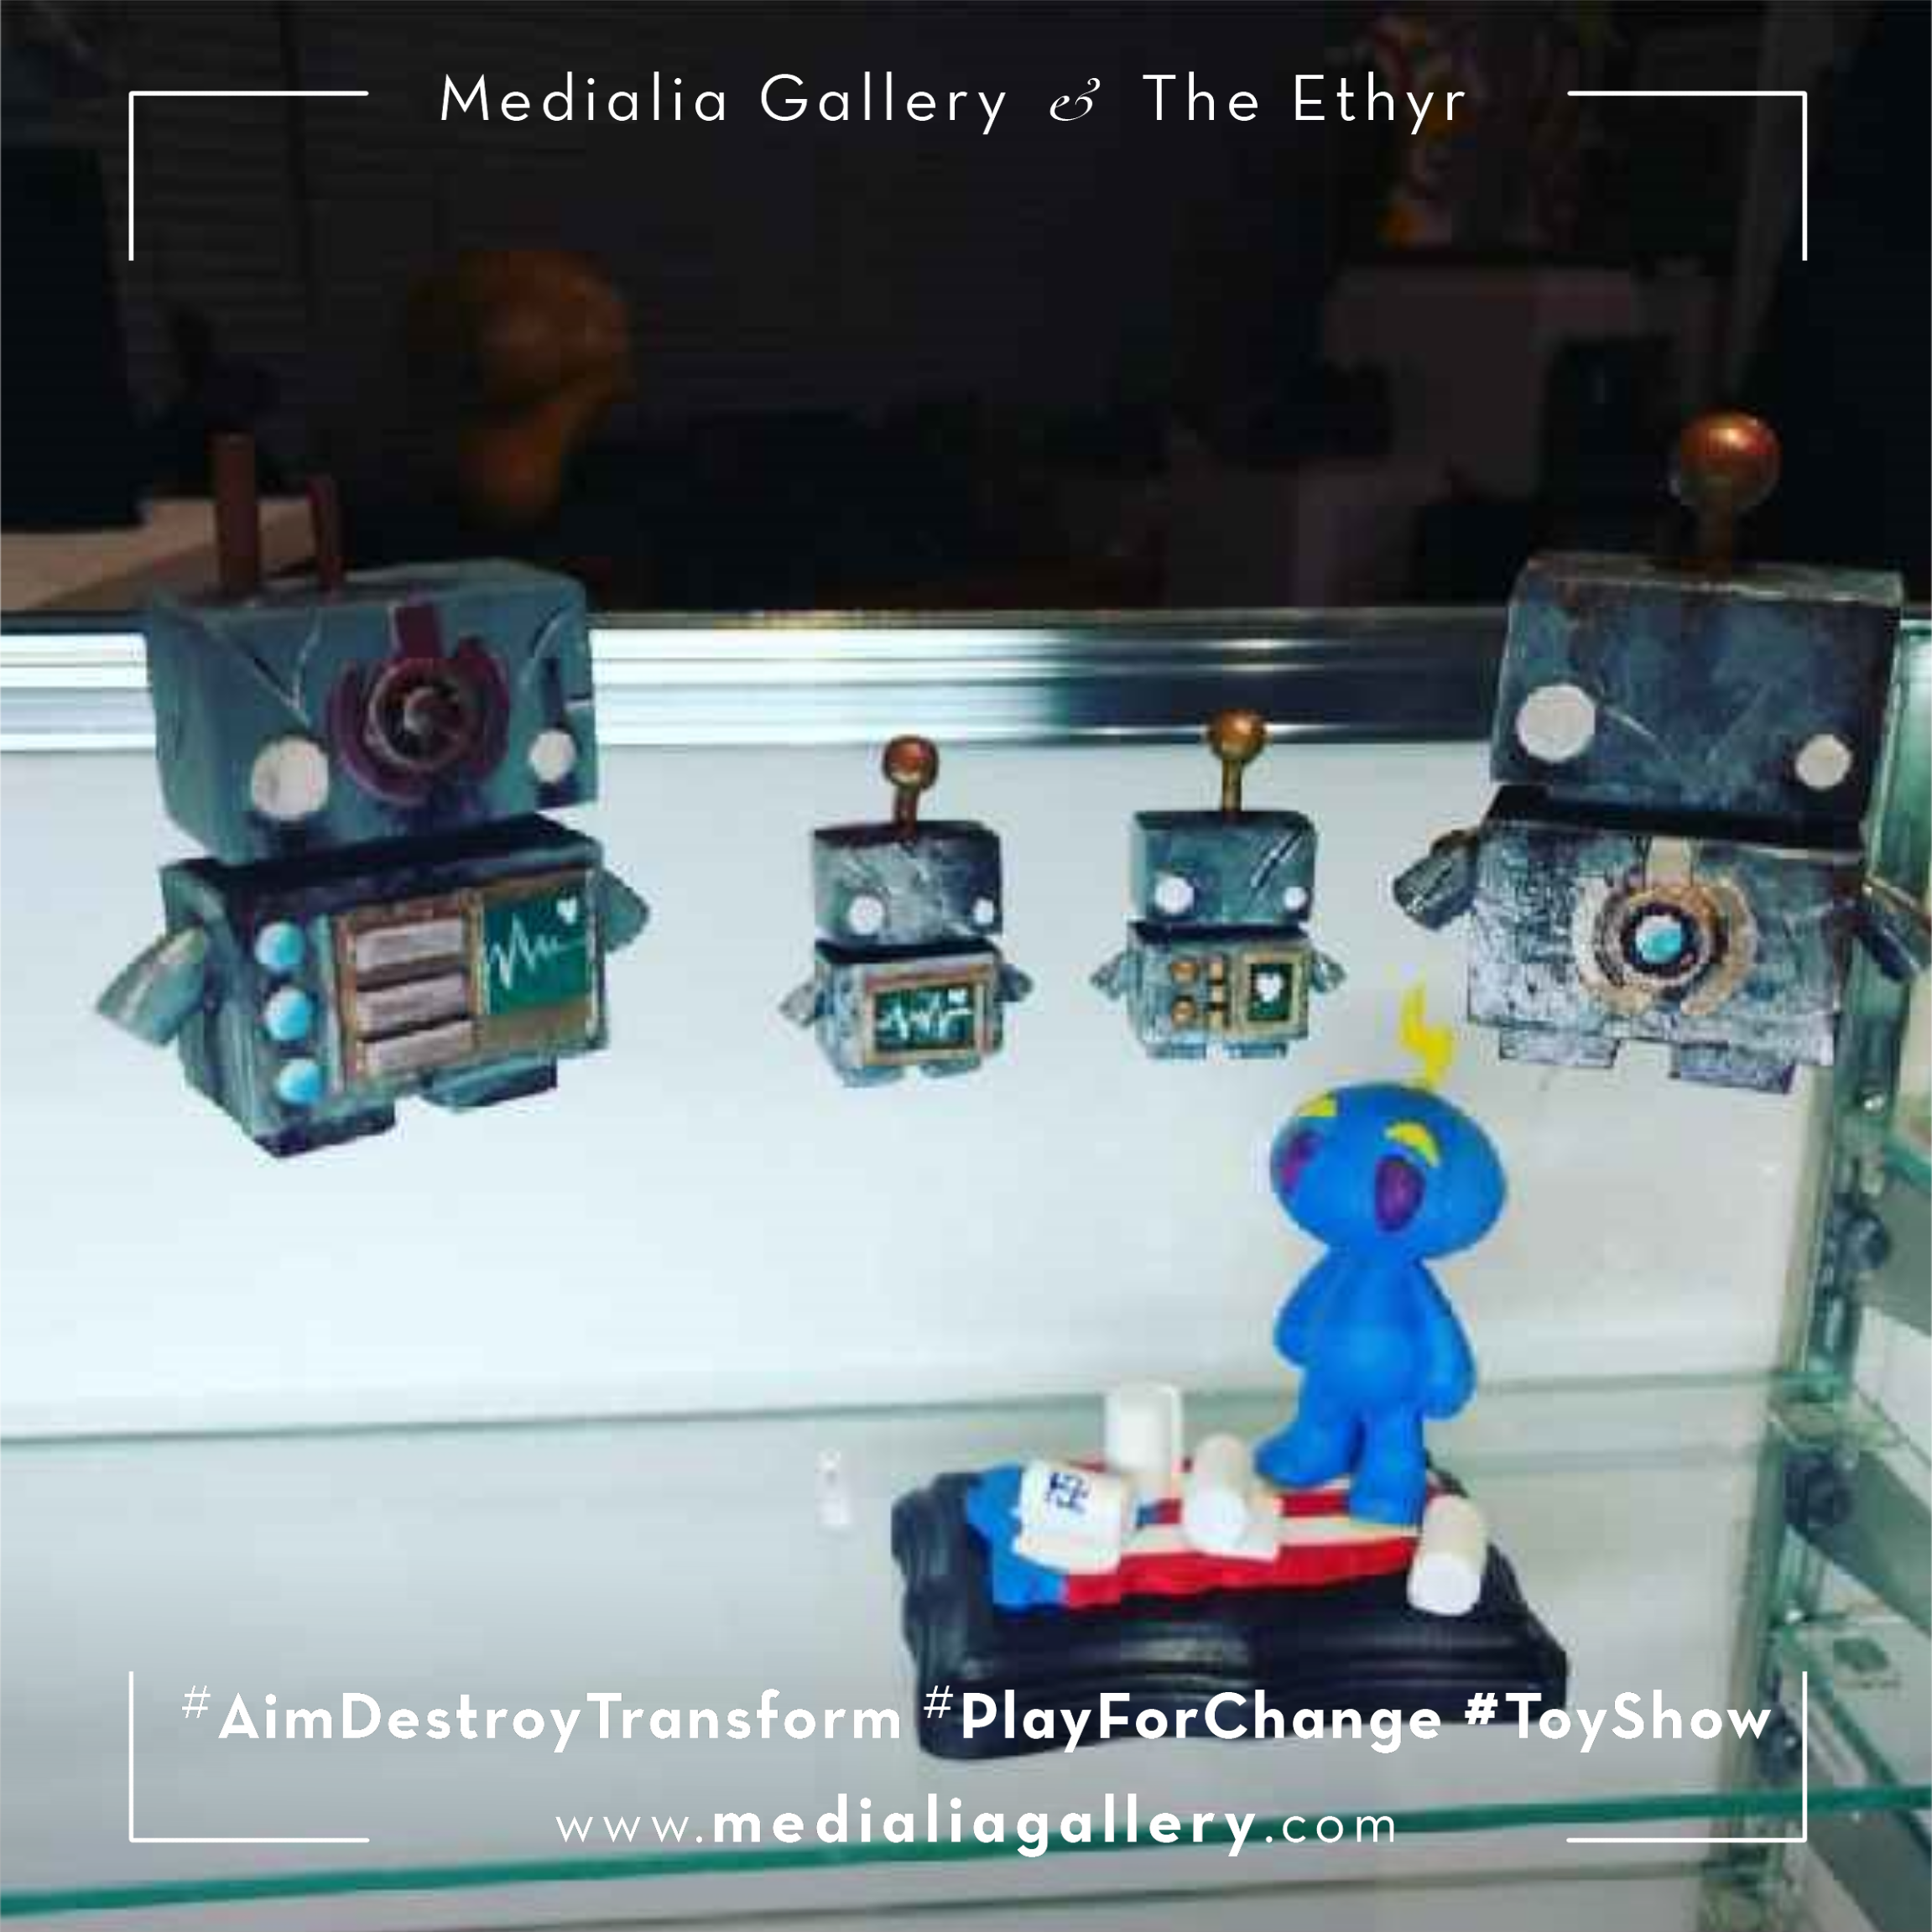 MedialiaGallery_The_Ethyr_AimDestroyTransform_Toy_Show_announcement_Showcase_III_November_2017.jpg.png